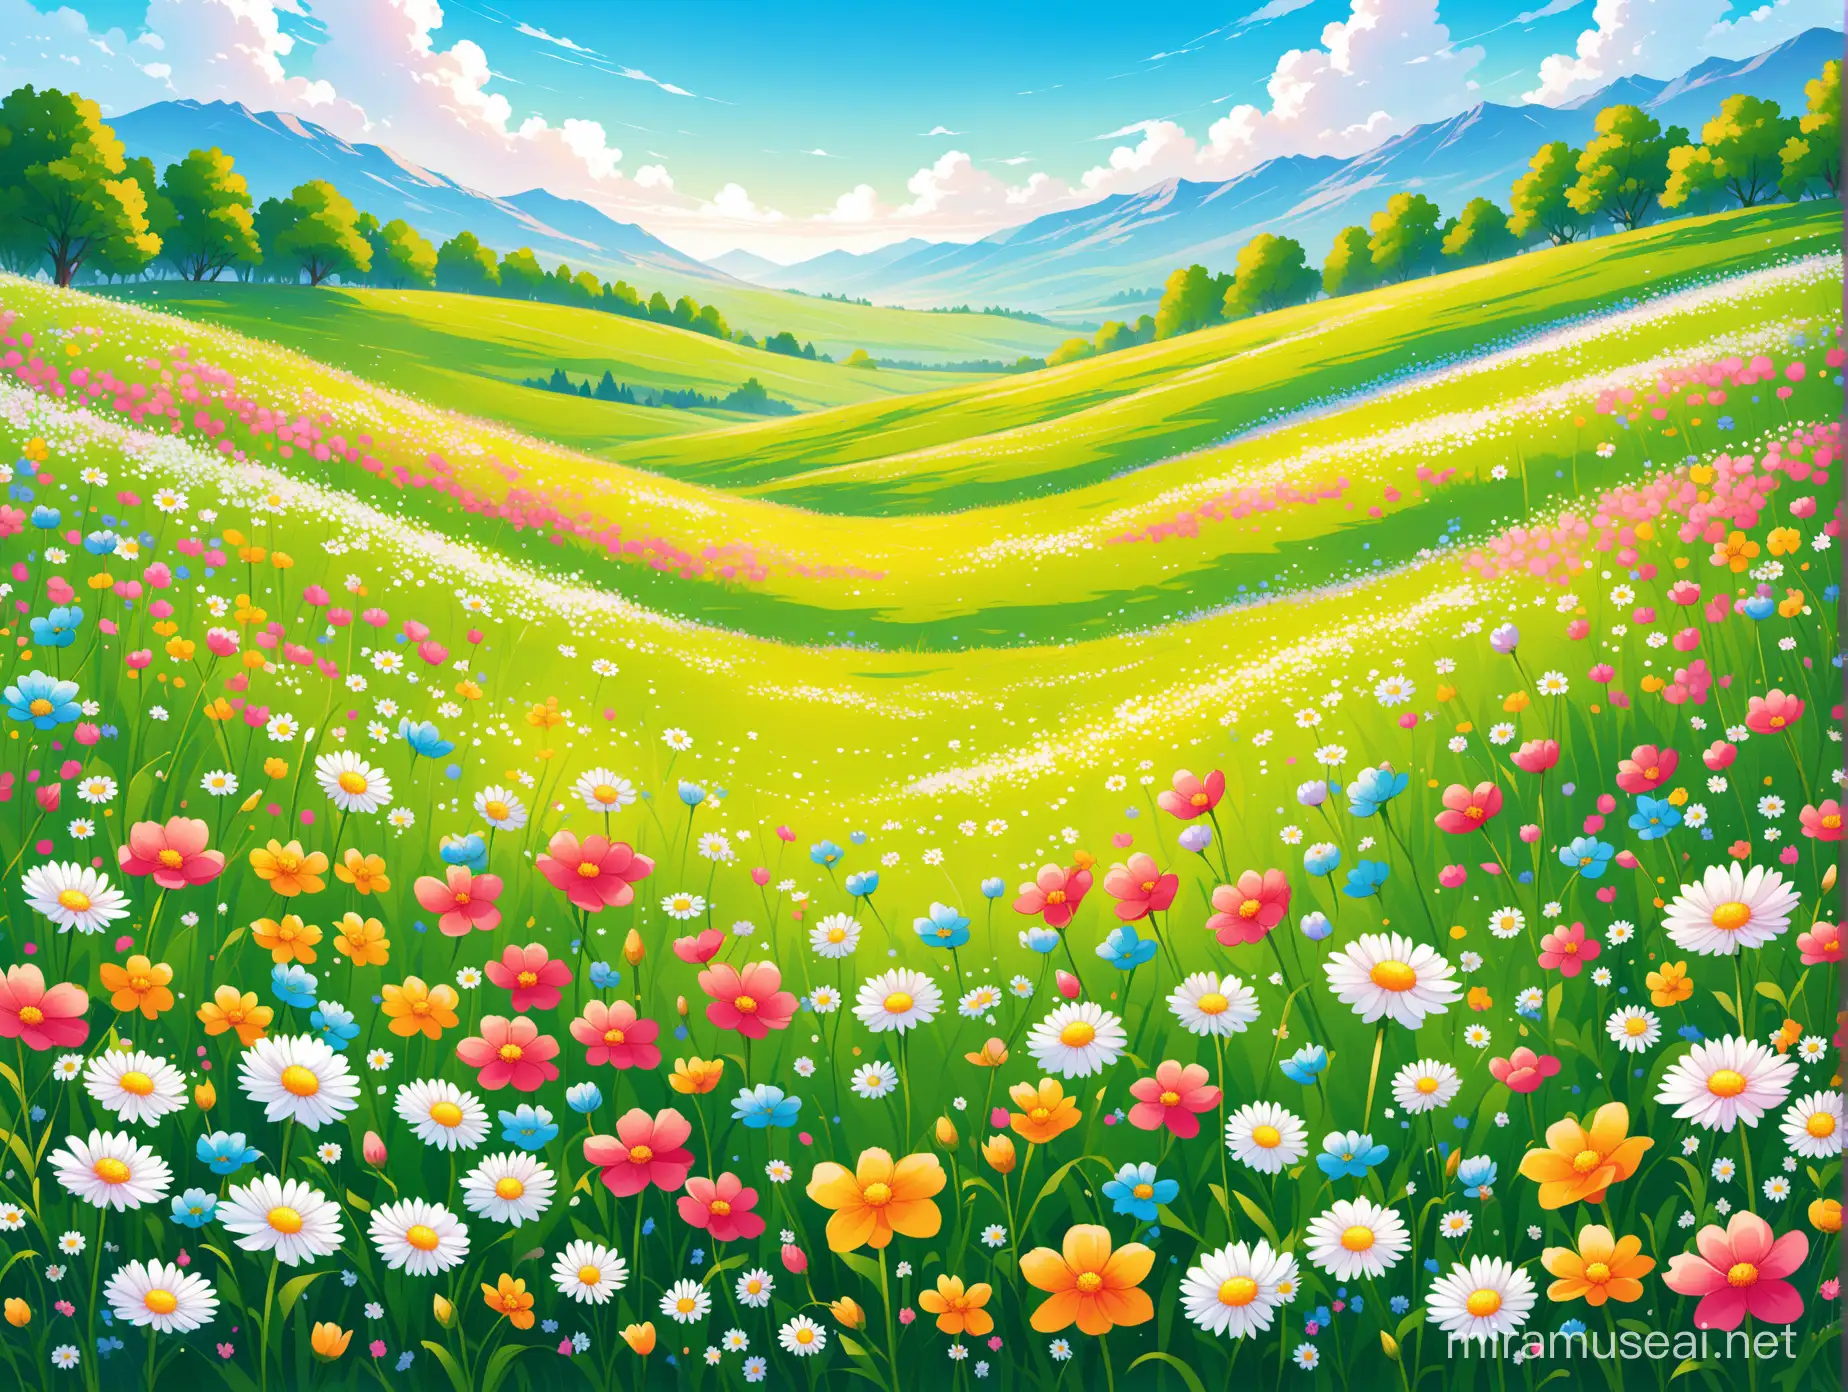 Flower meadow, spring illustration